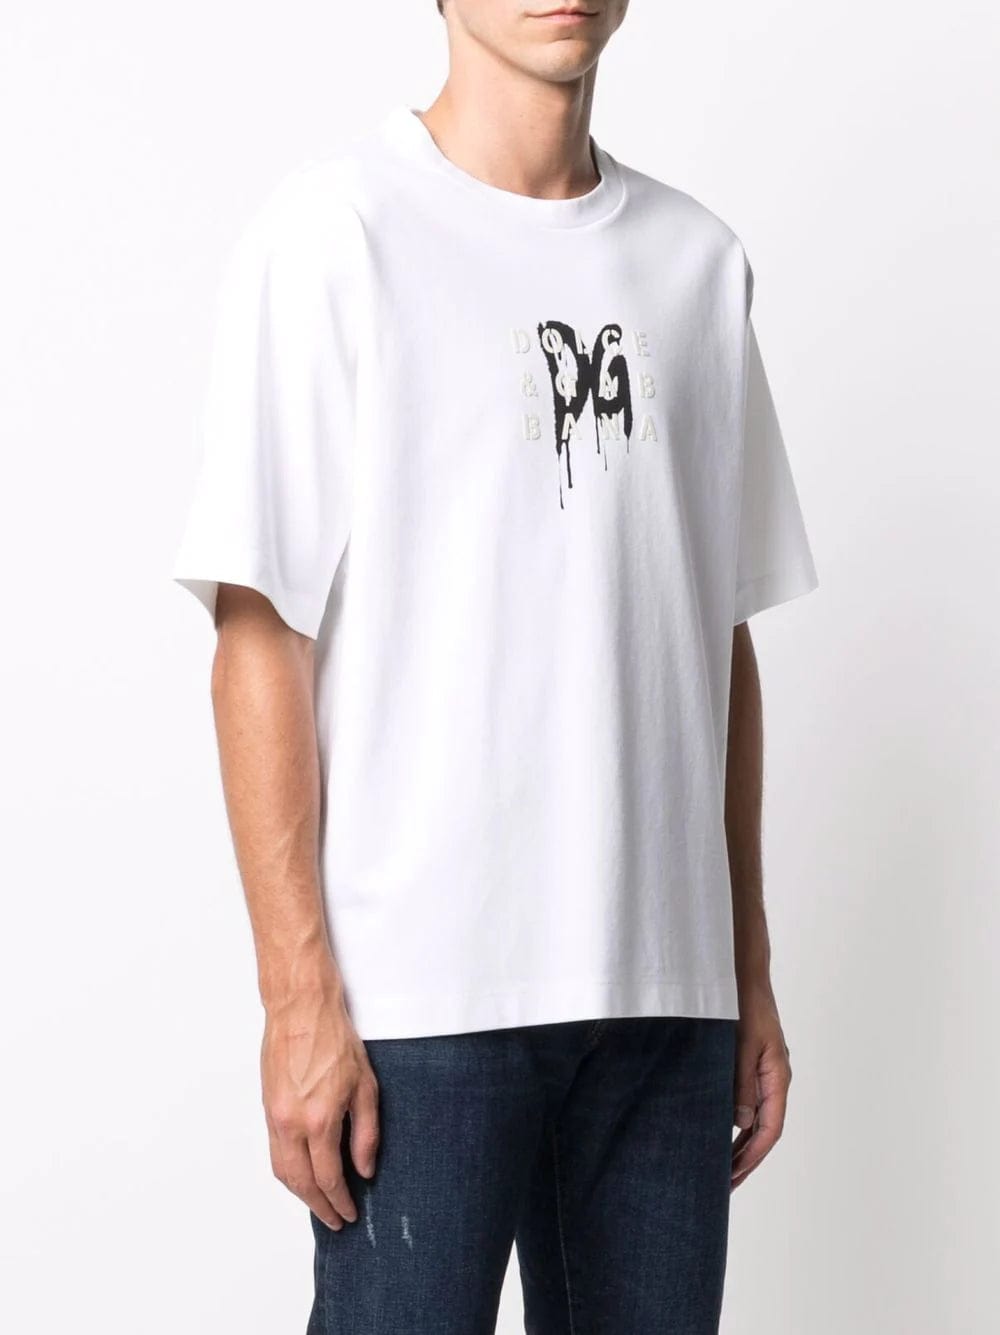 Dolce & Gabbana Logo-Print Short-Sleeve T-Shirt